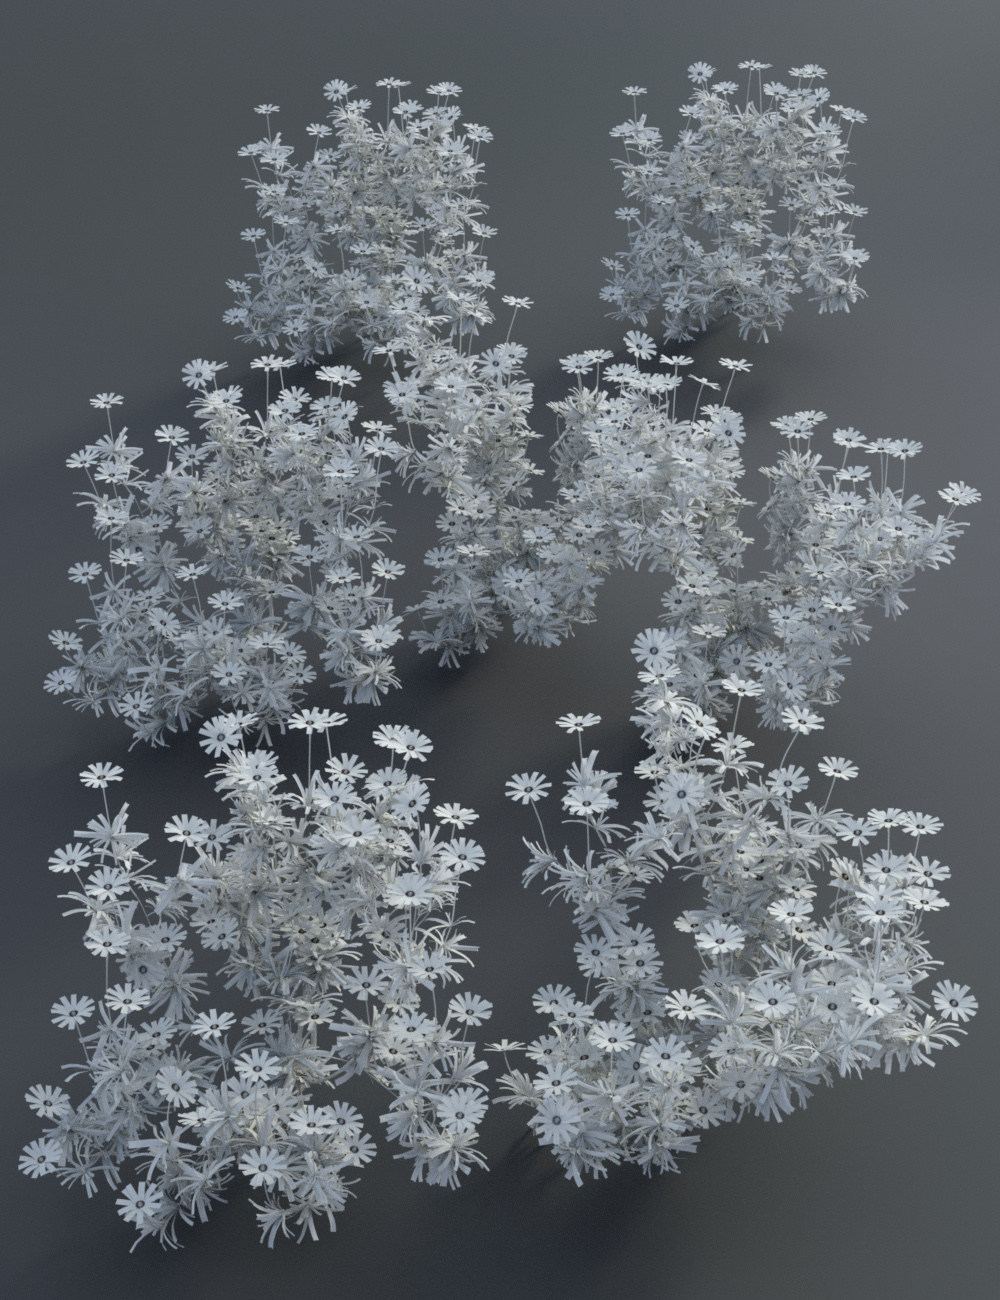 Garden Flowers - Garden Daisies by: MartinJFrost, 3D Models by Daz 3D